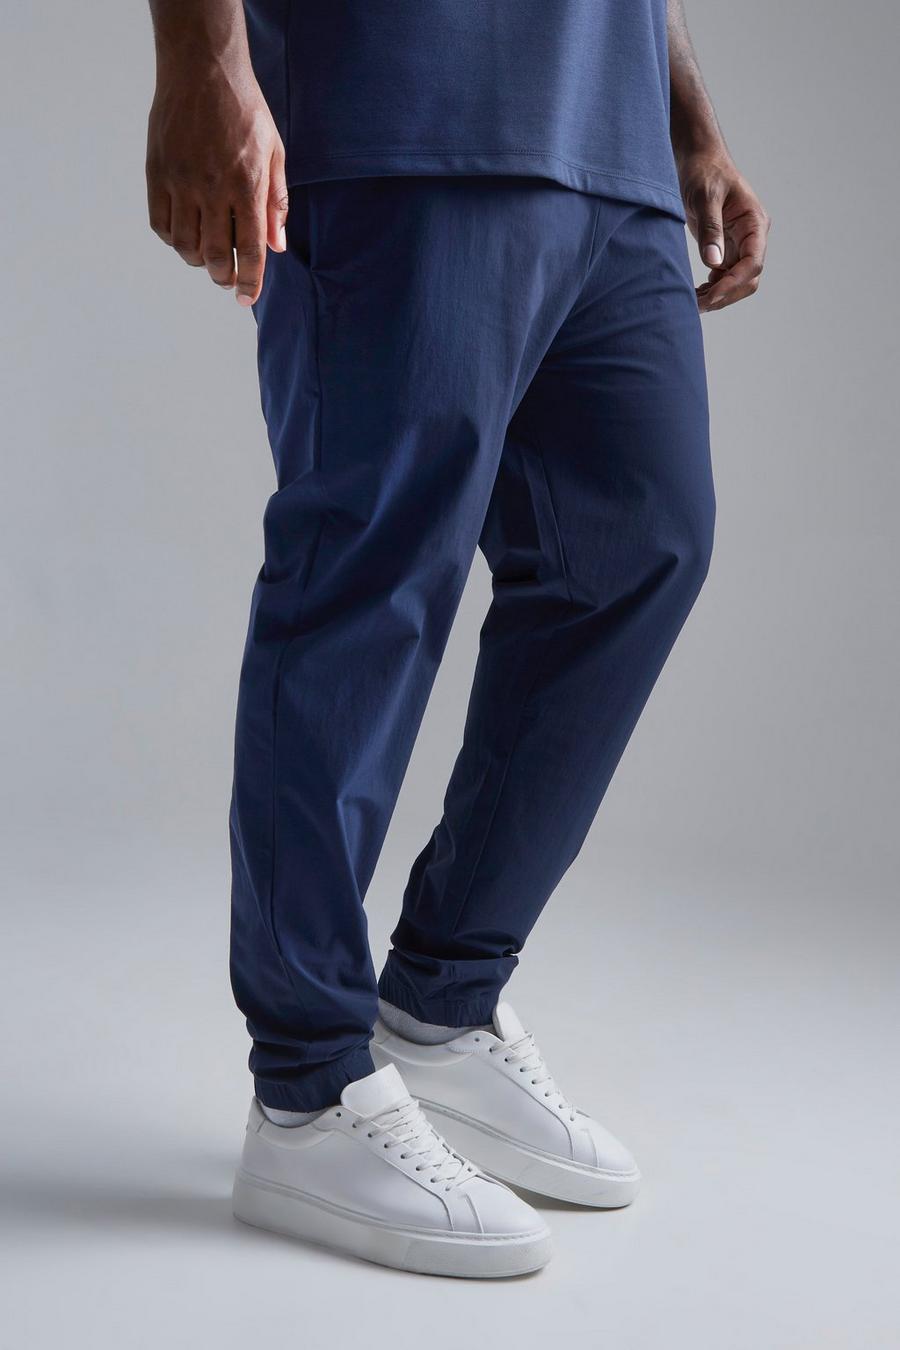 Pantalón Plus ajustado técnico con botamanga, Navy blu oltremare